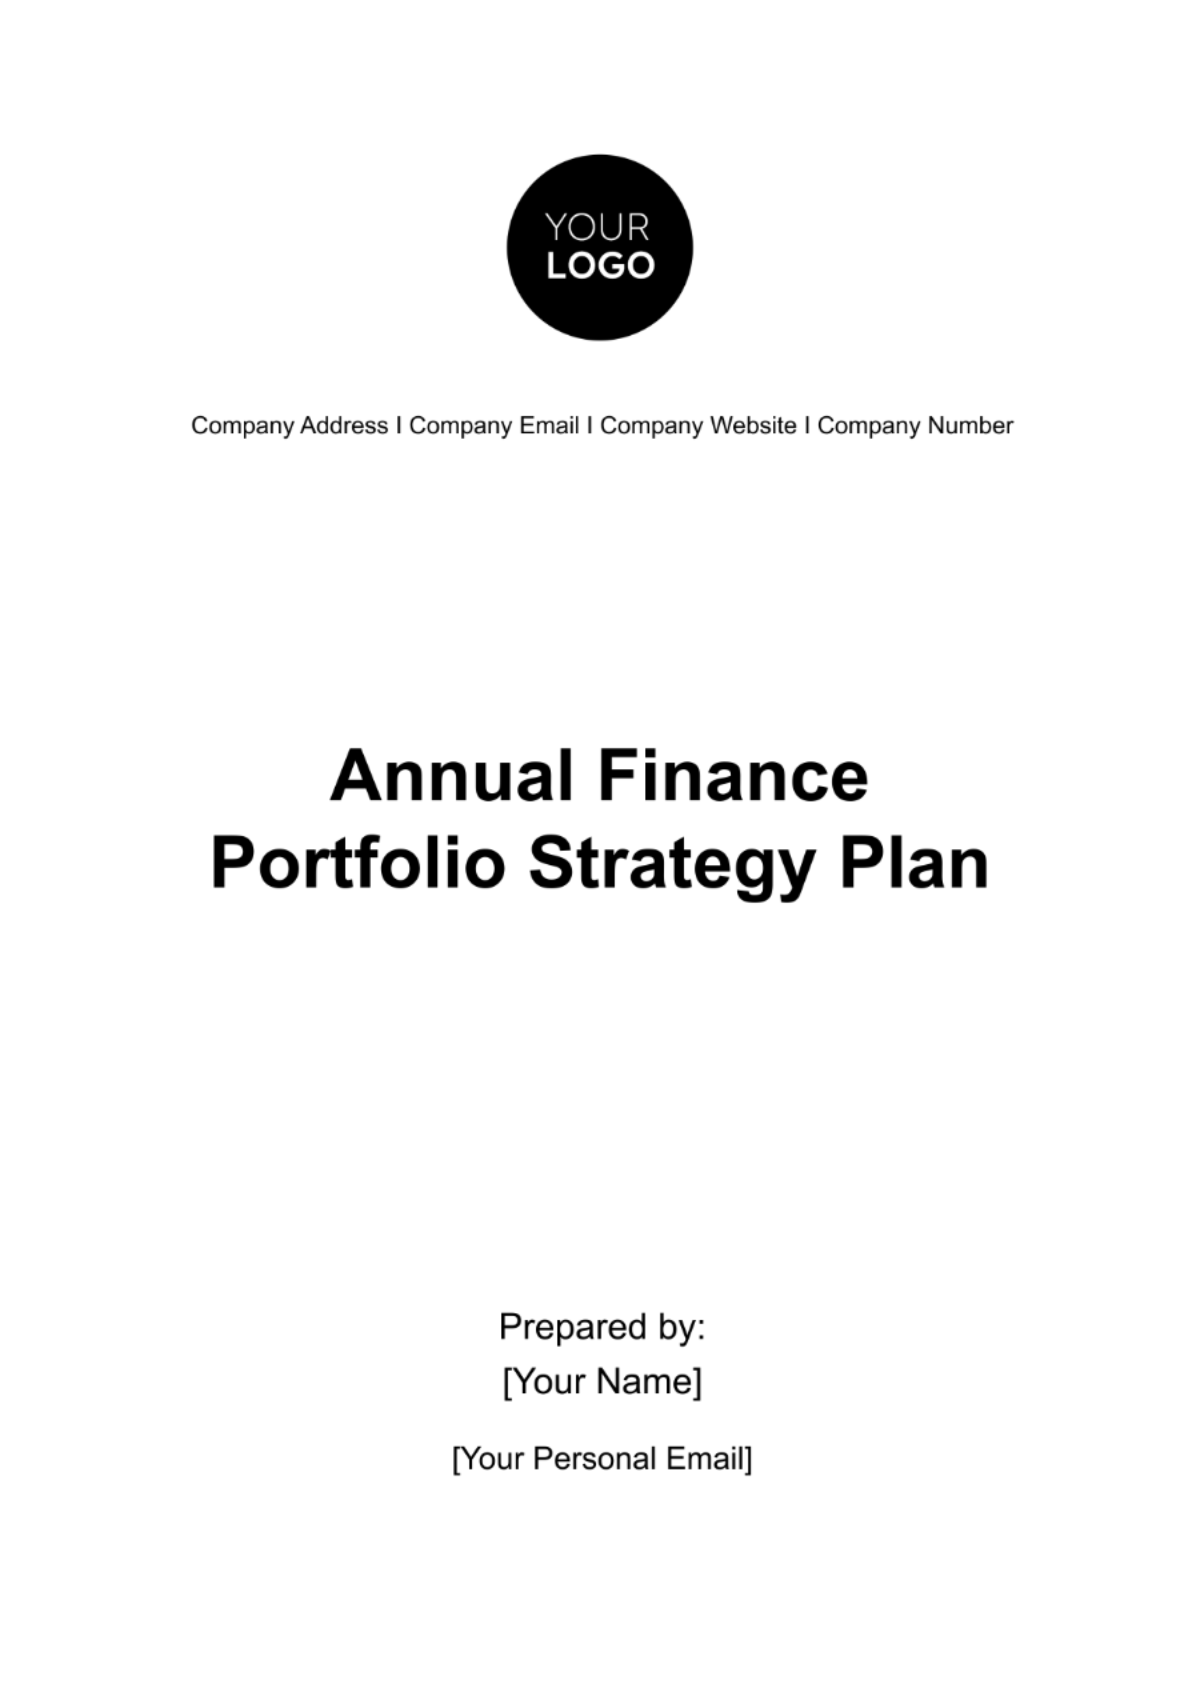 Annual Finance Portfolio Strategy Plan Template